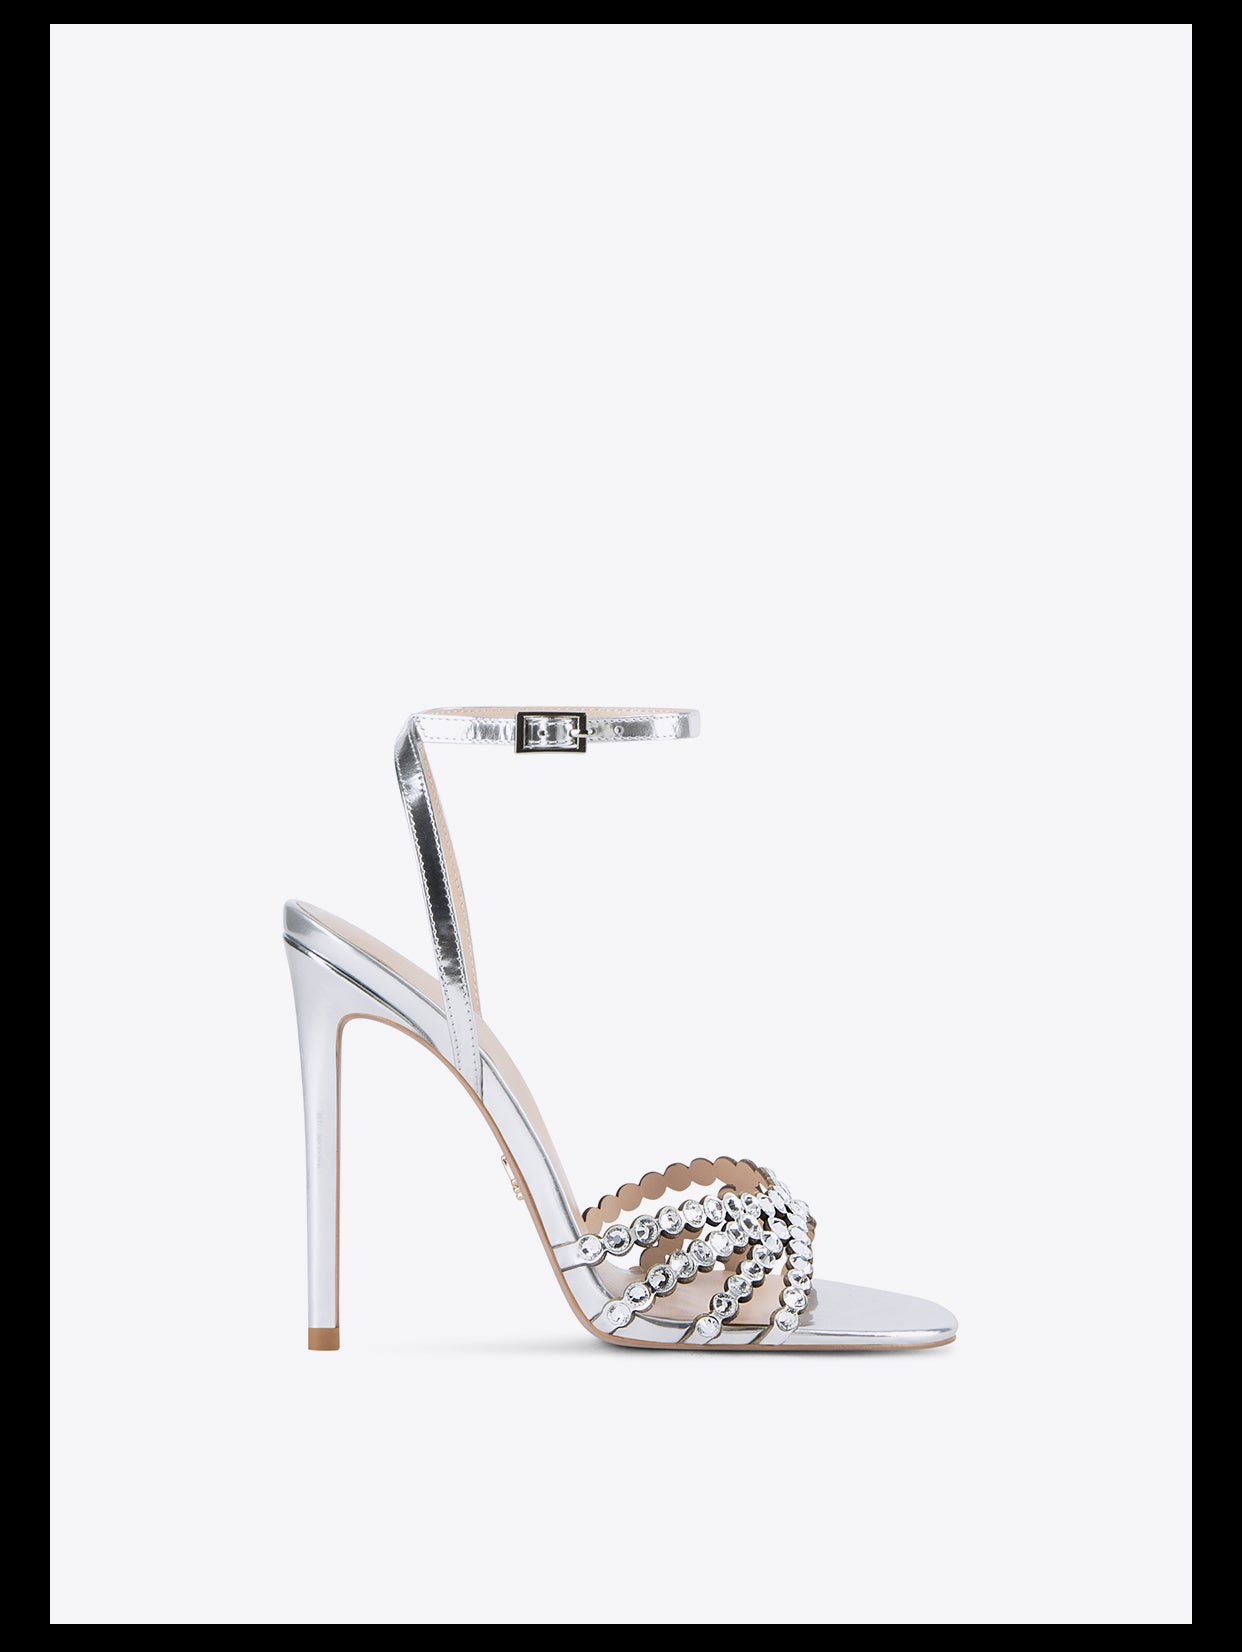 Silver stiletto high heels rhinestone open toe high heels sandals - Caliop